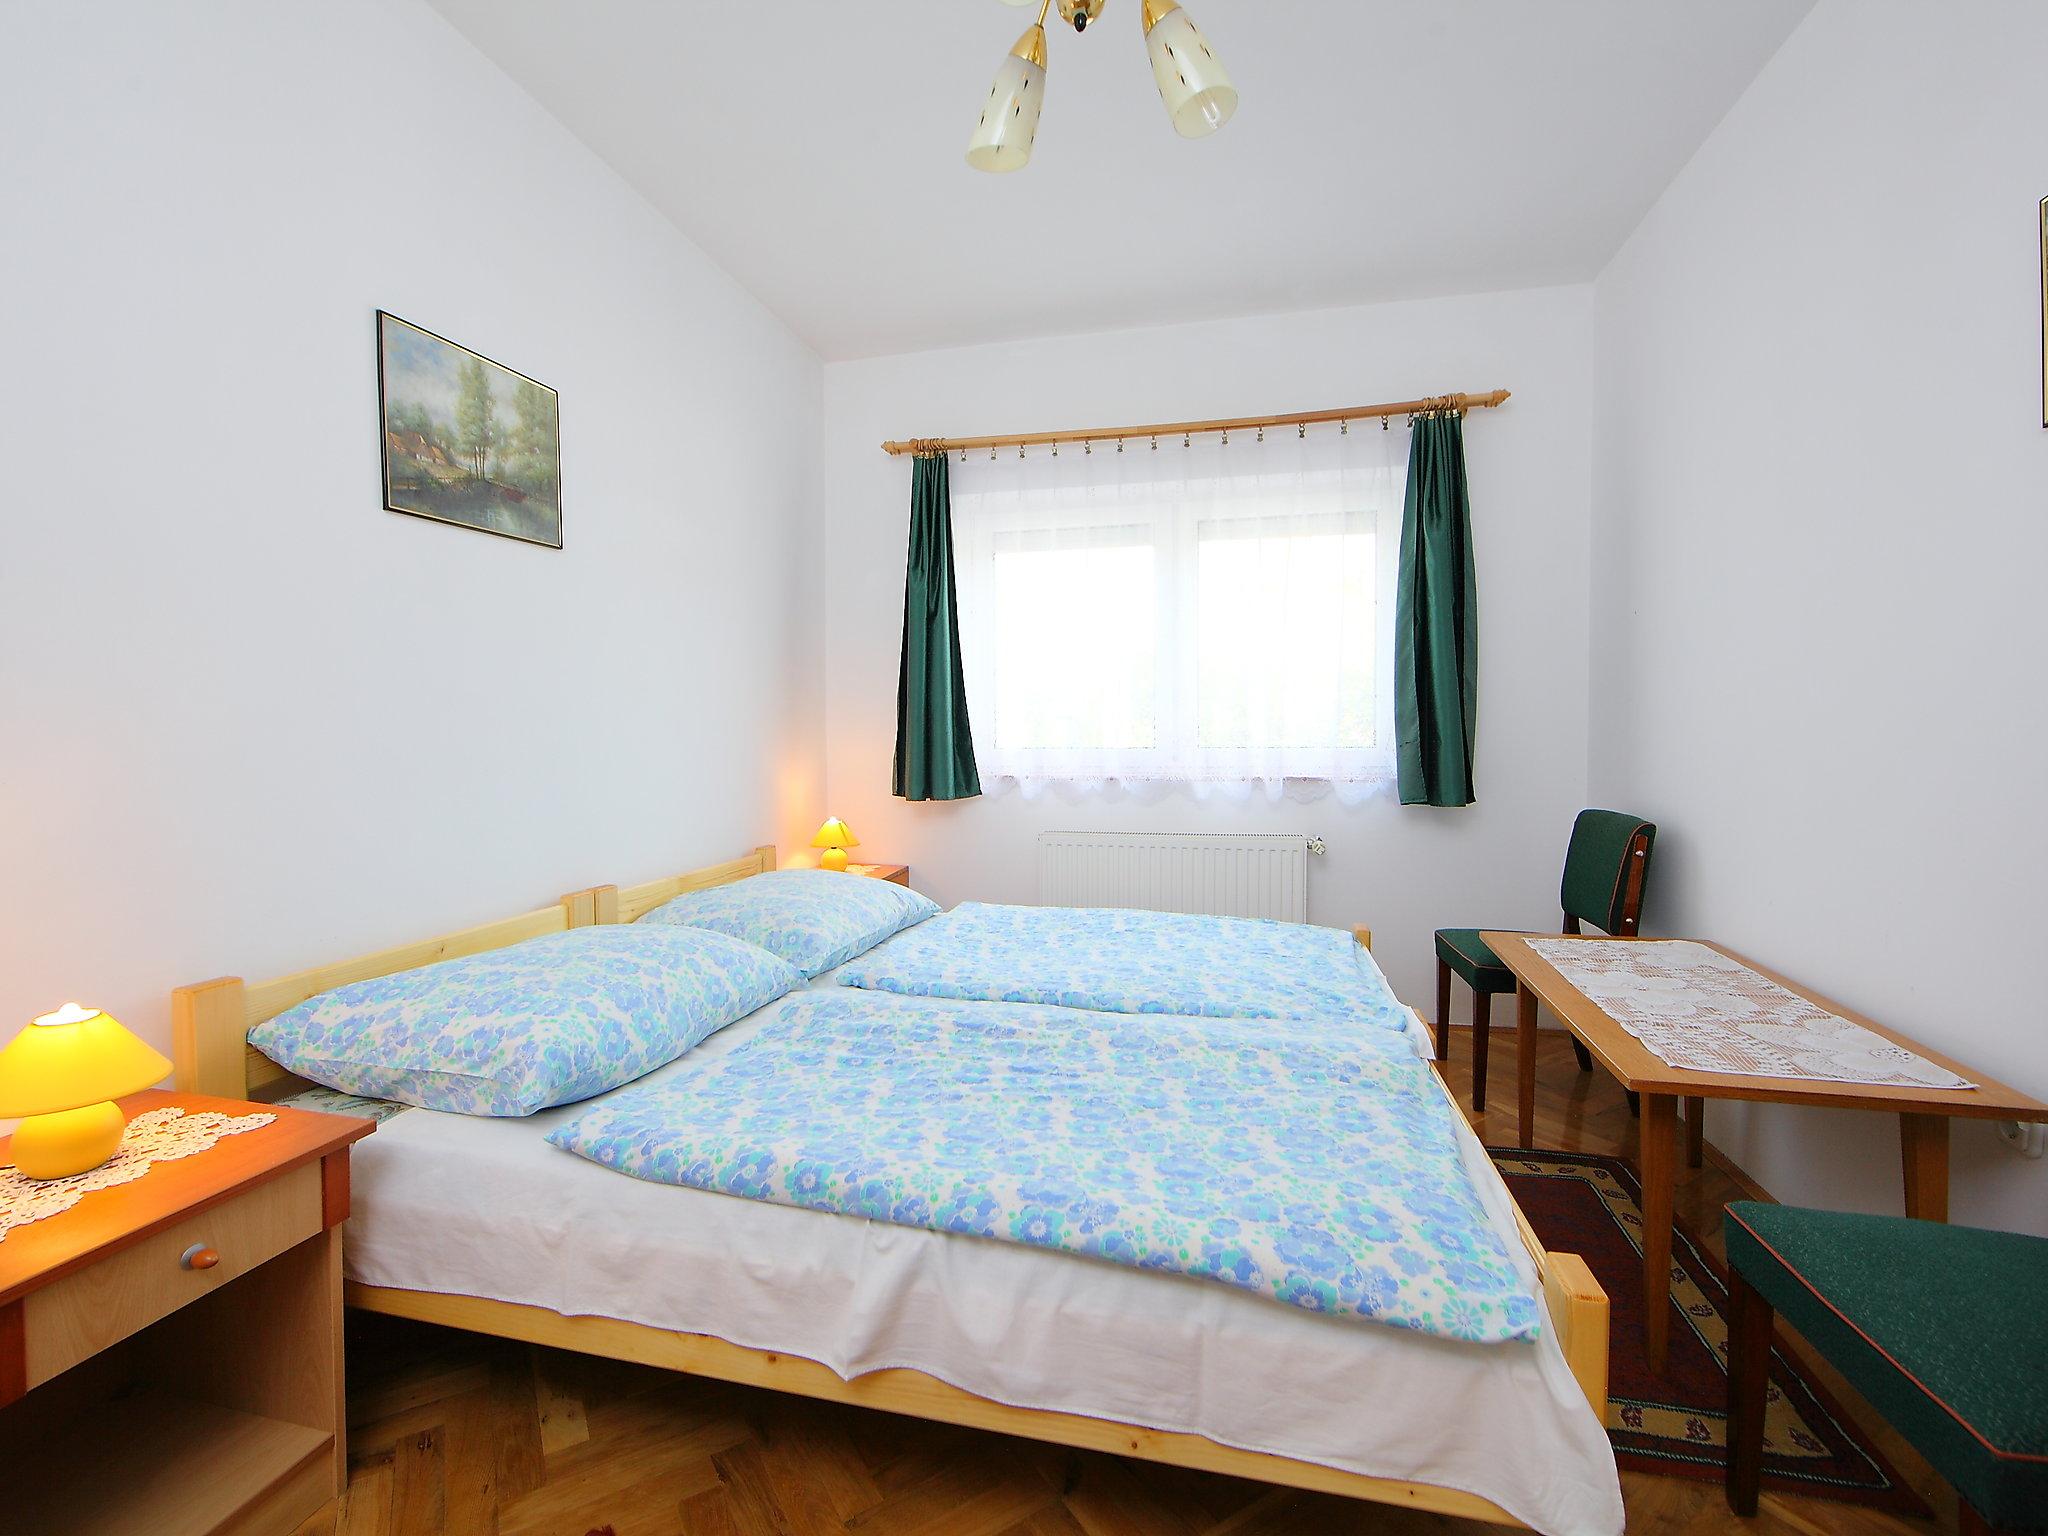 Foto 6 - Casa con 6 camere da letto a Balatonszárszó con giardino e vista mare